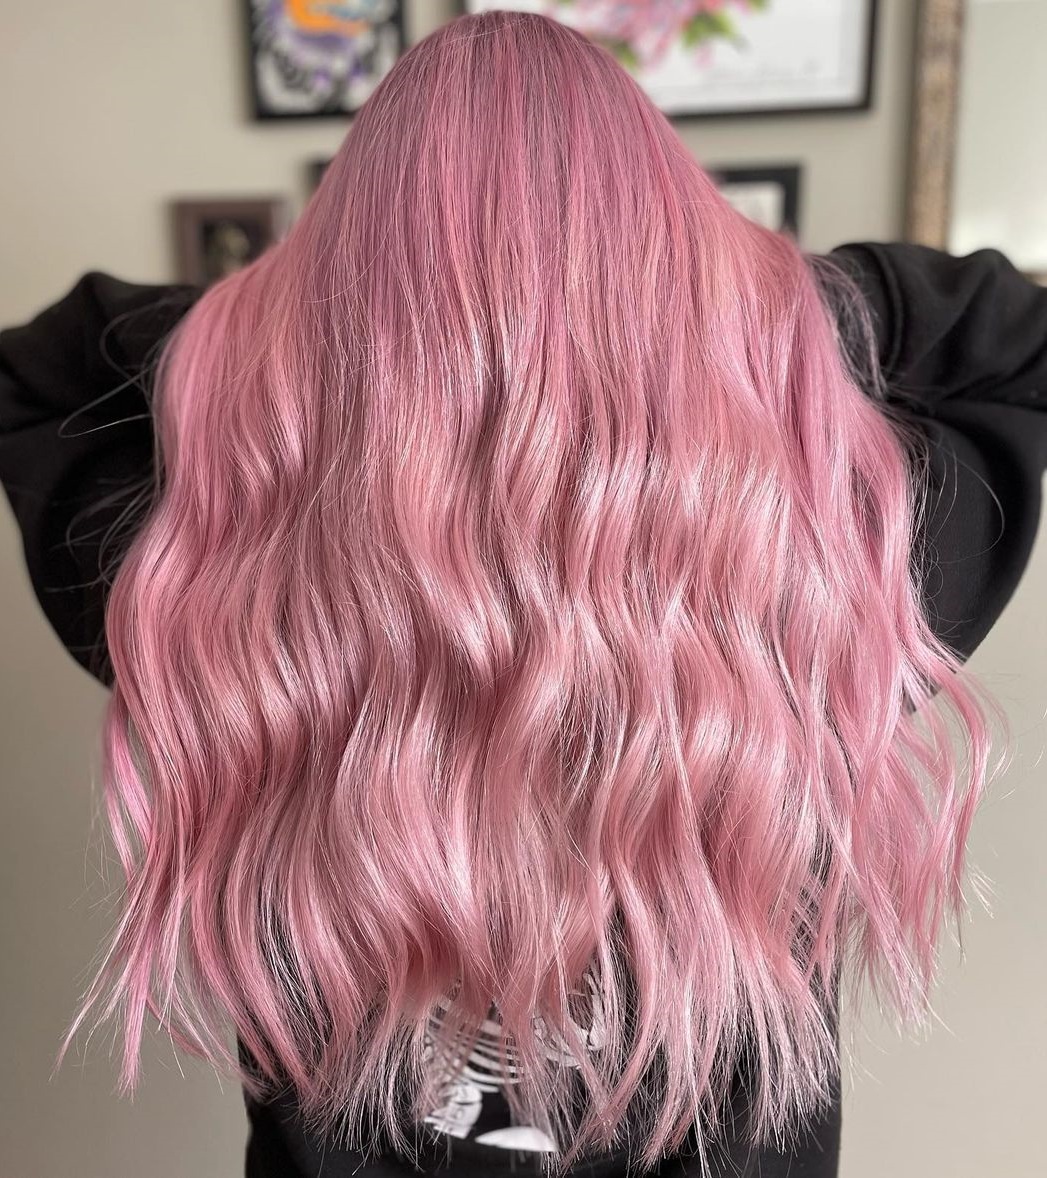 22 Stunning Examples of Millennial Pink Hair